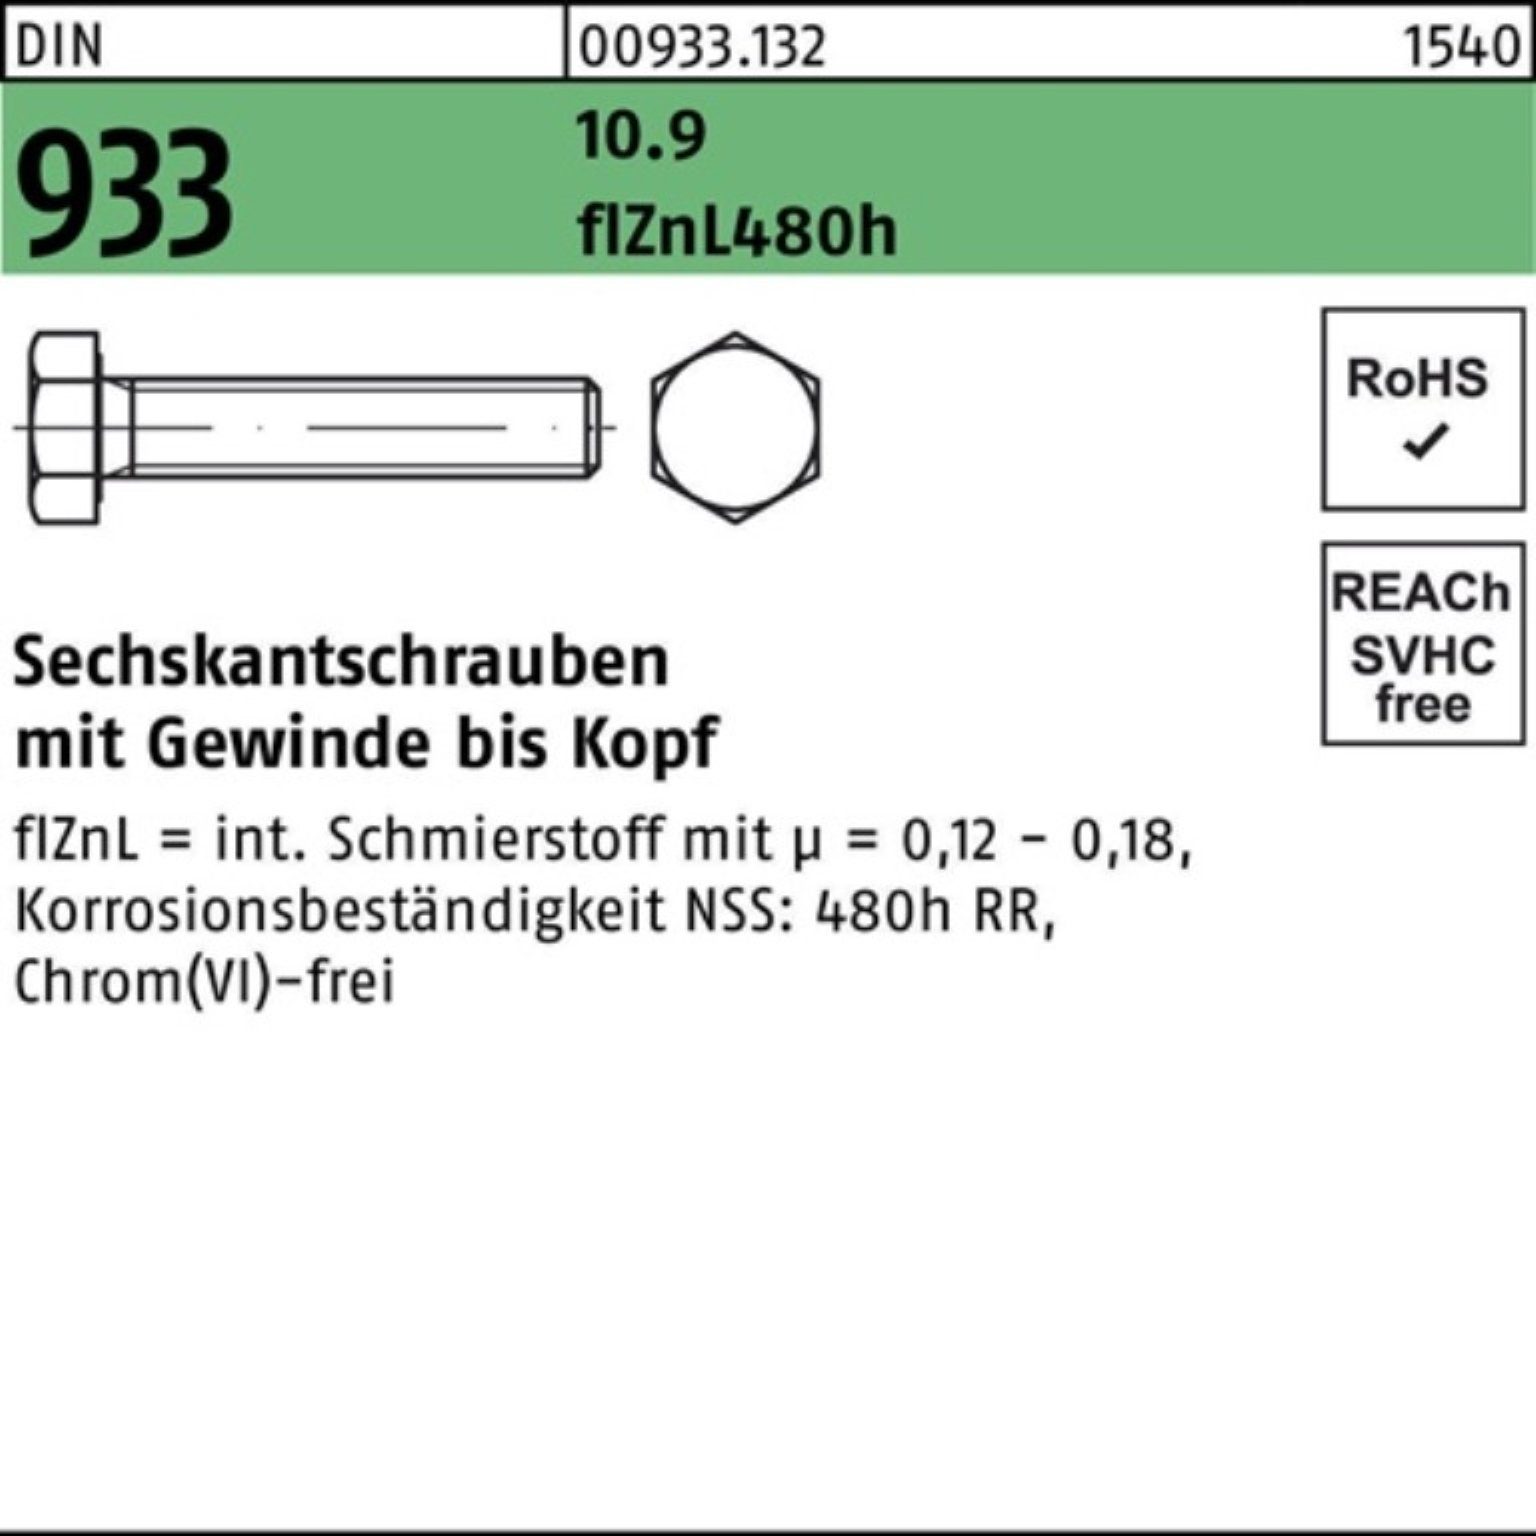 Reyher Sechskantschraube 200er Pack Sechskantschraube DIN 933 VG M8x 16 10.9 flZnL/nc/x/x/480h